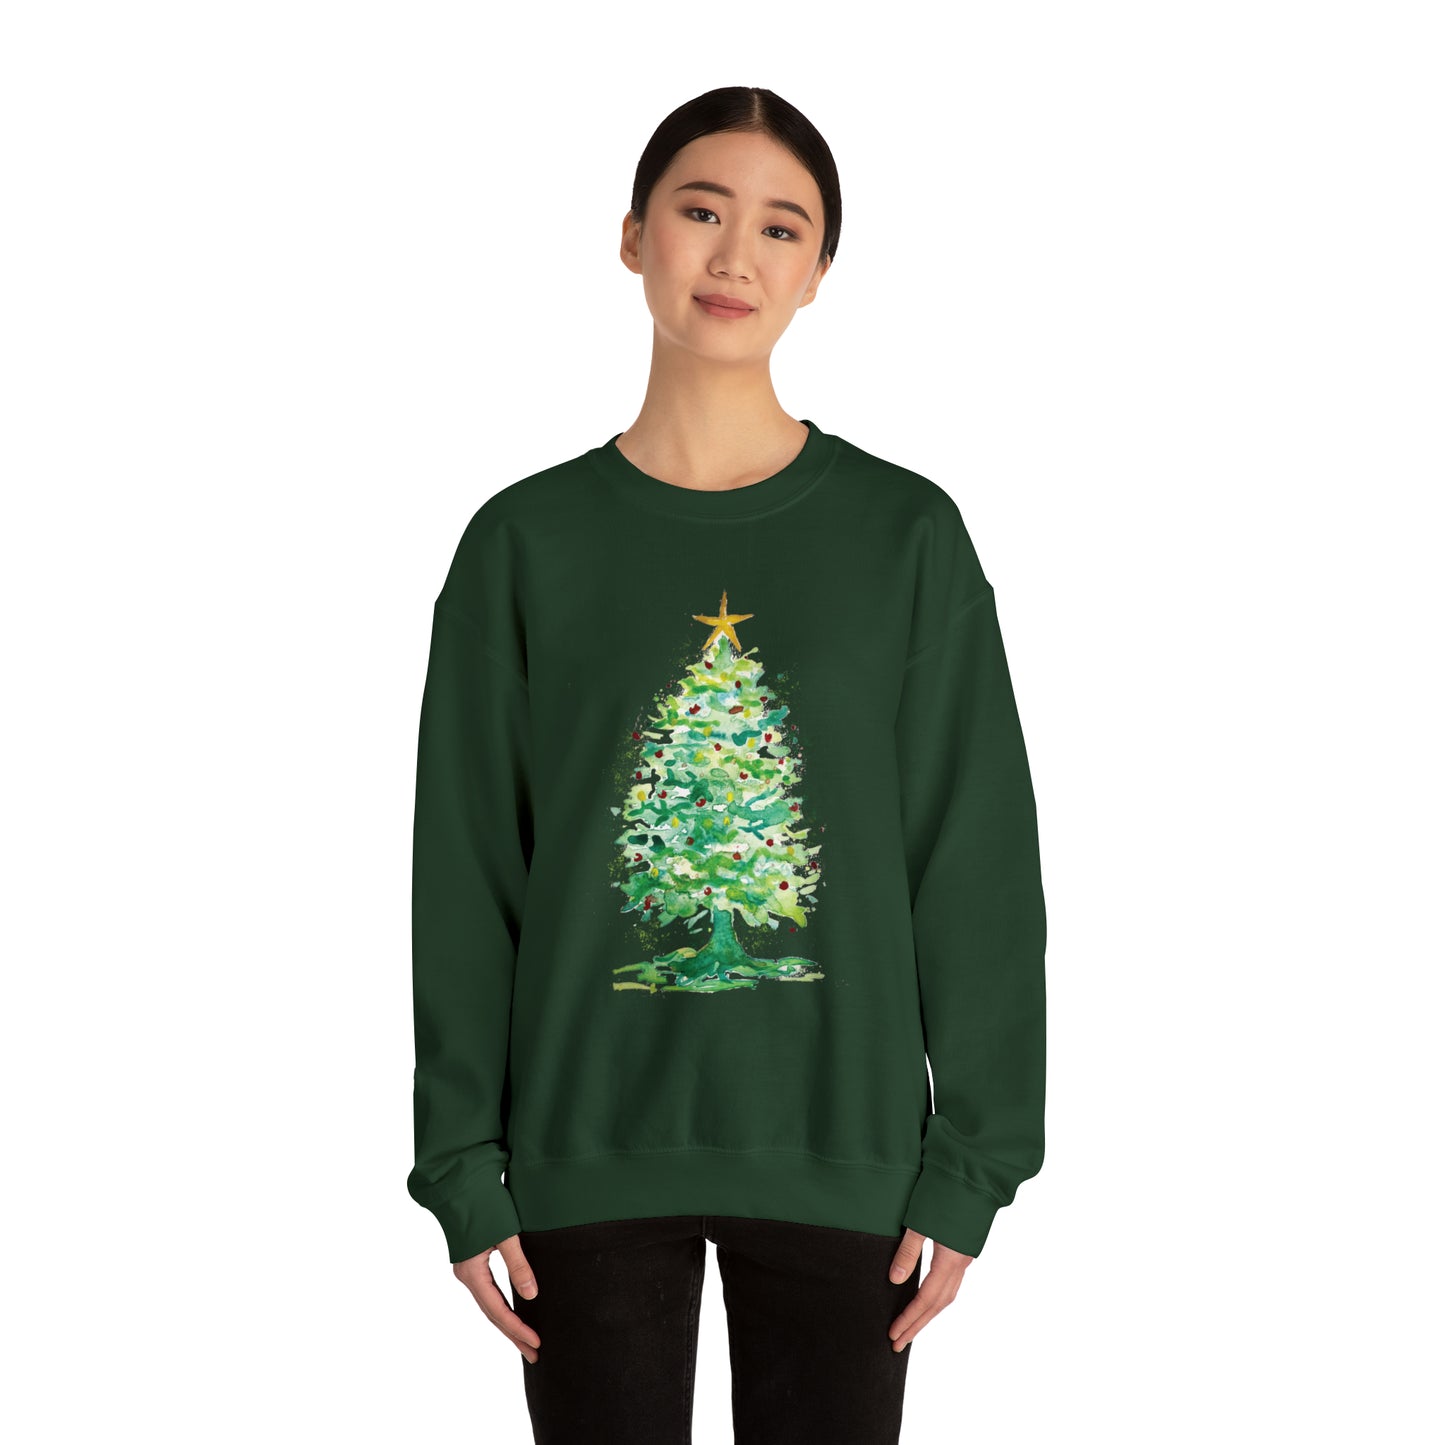 Treetops Glisten Crewneck Sweatshirt